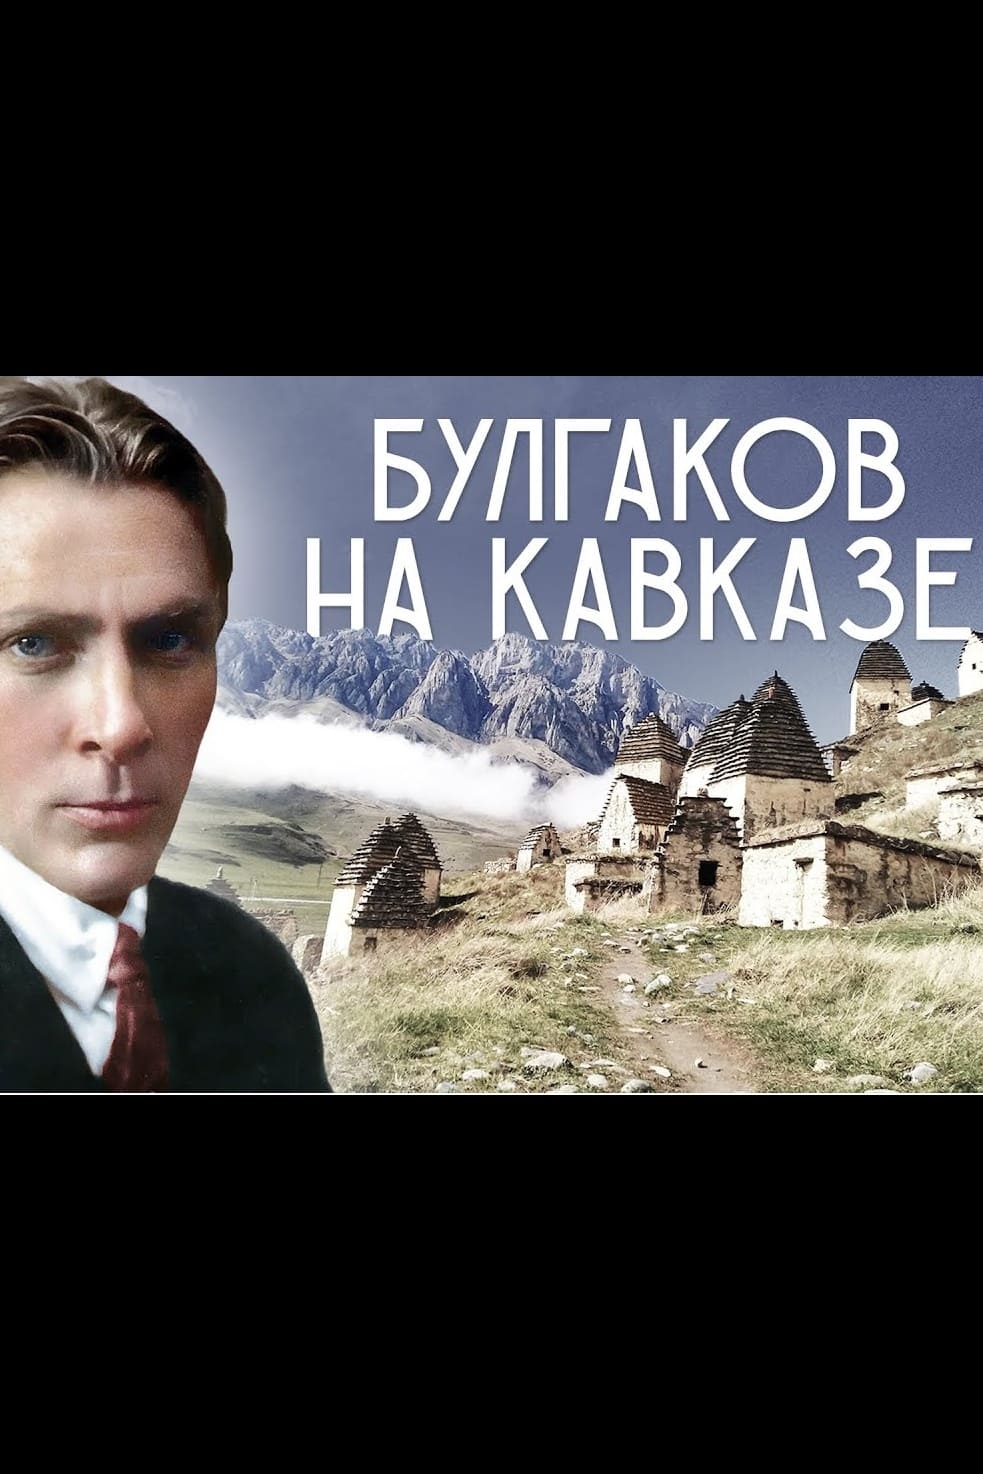 Mikhail Bulgakov in the Caucasus